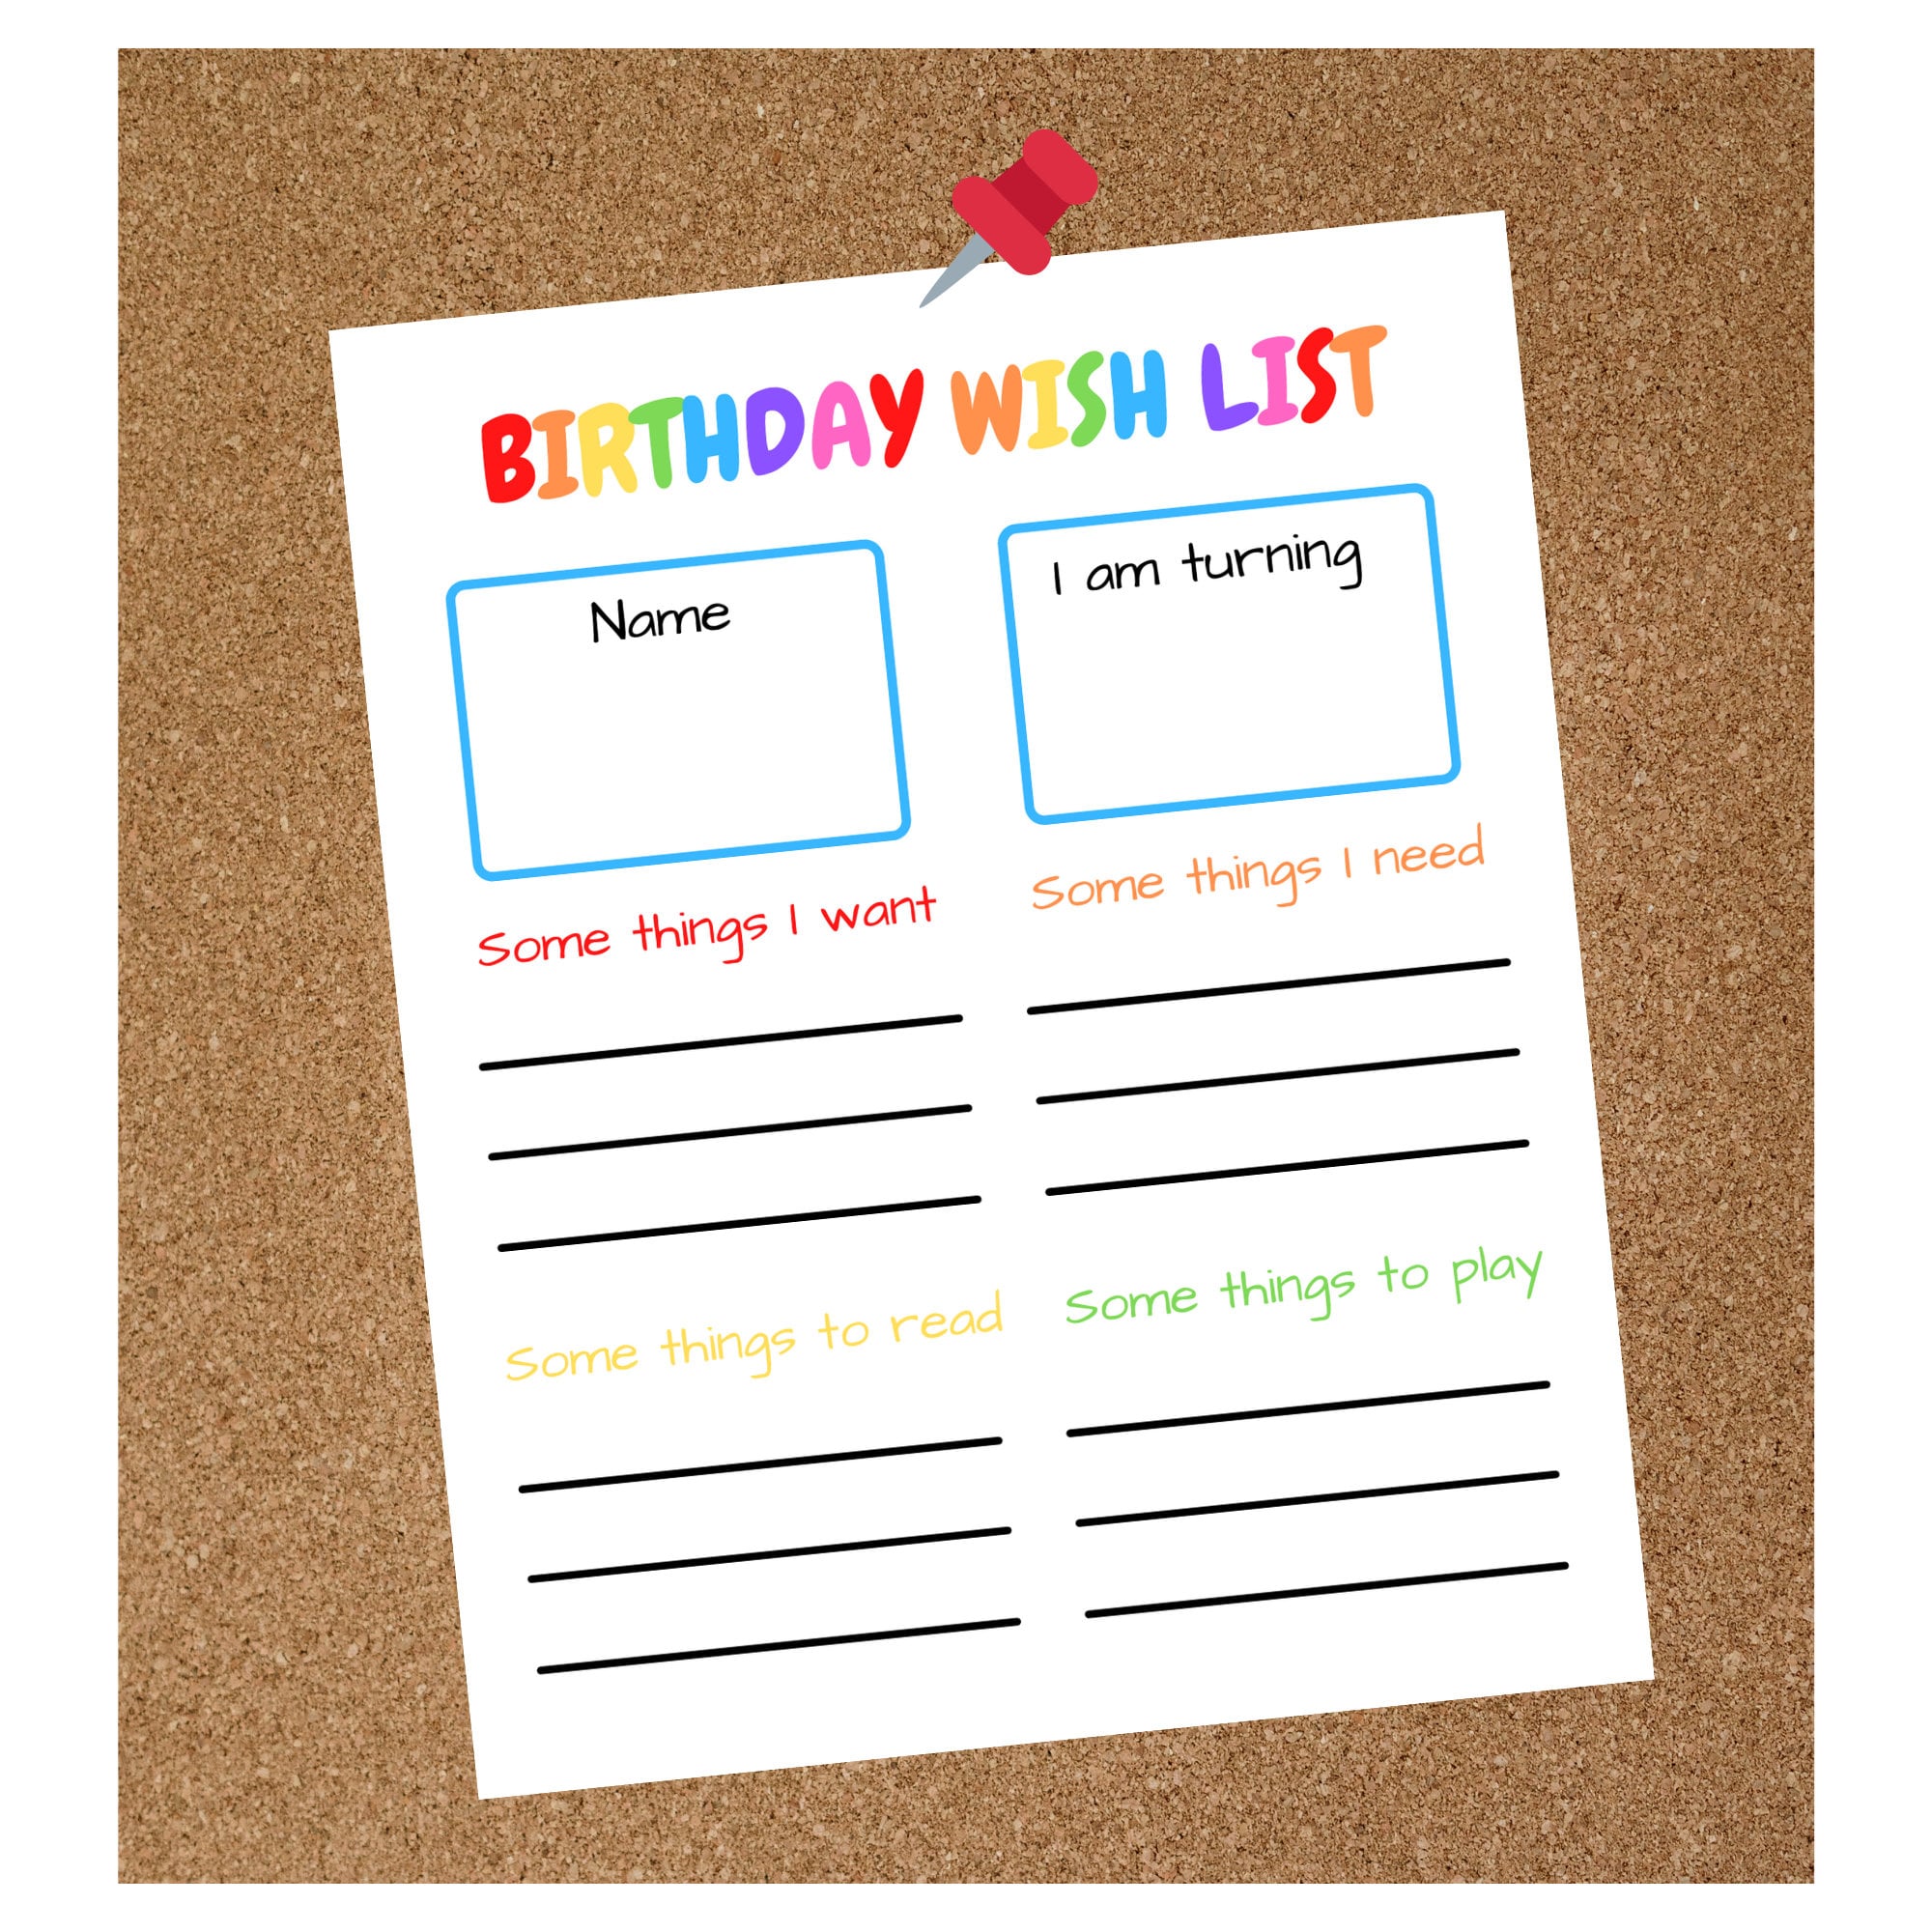 birthday-wish-list-kids-birthday-list-birthday-wants-gifts-etsy-espa-a